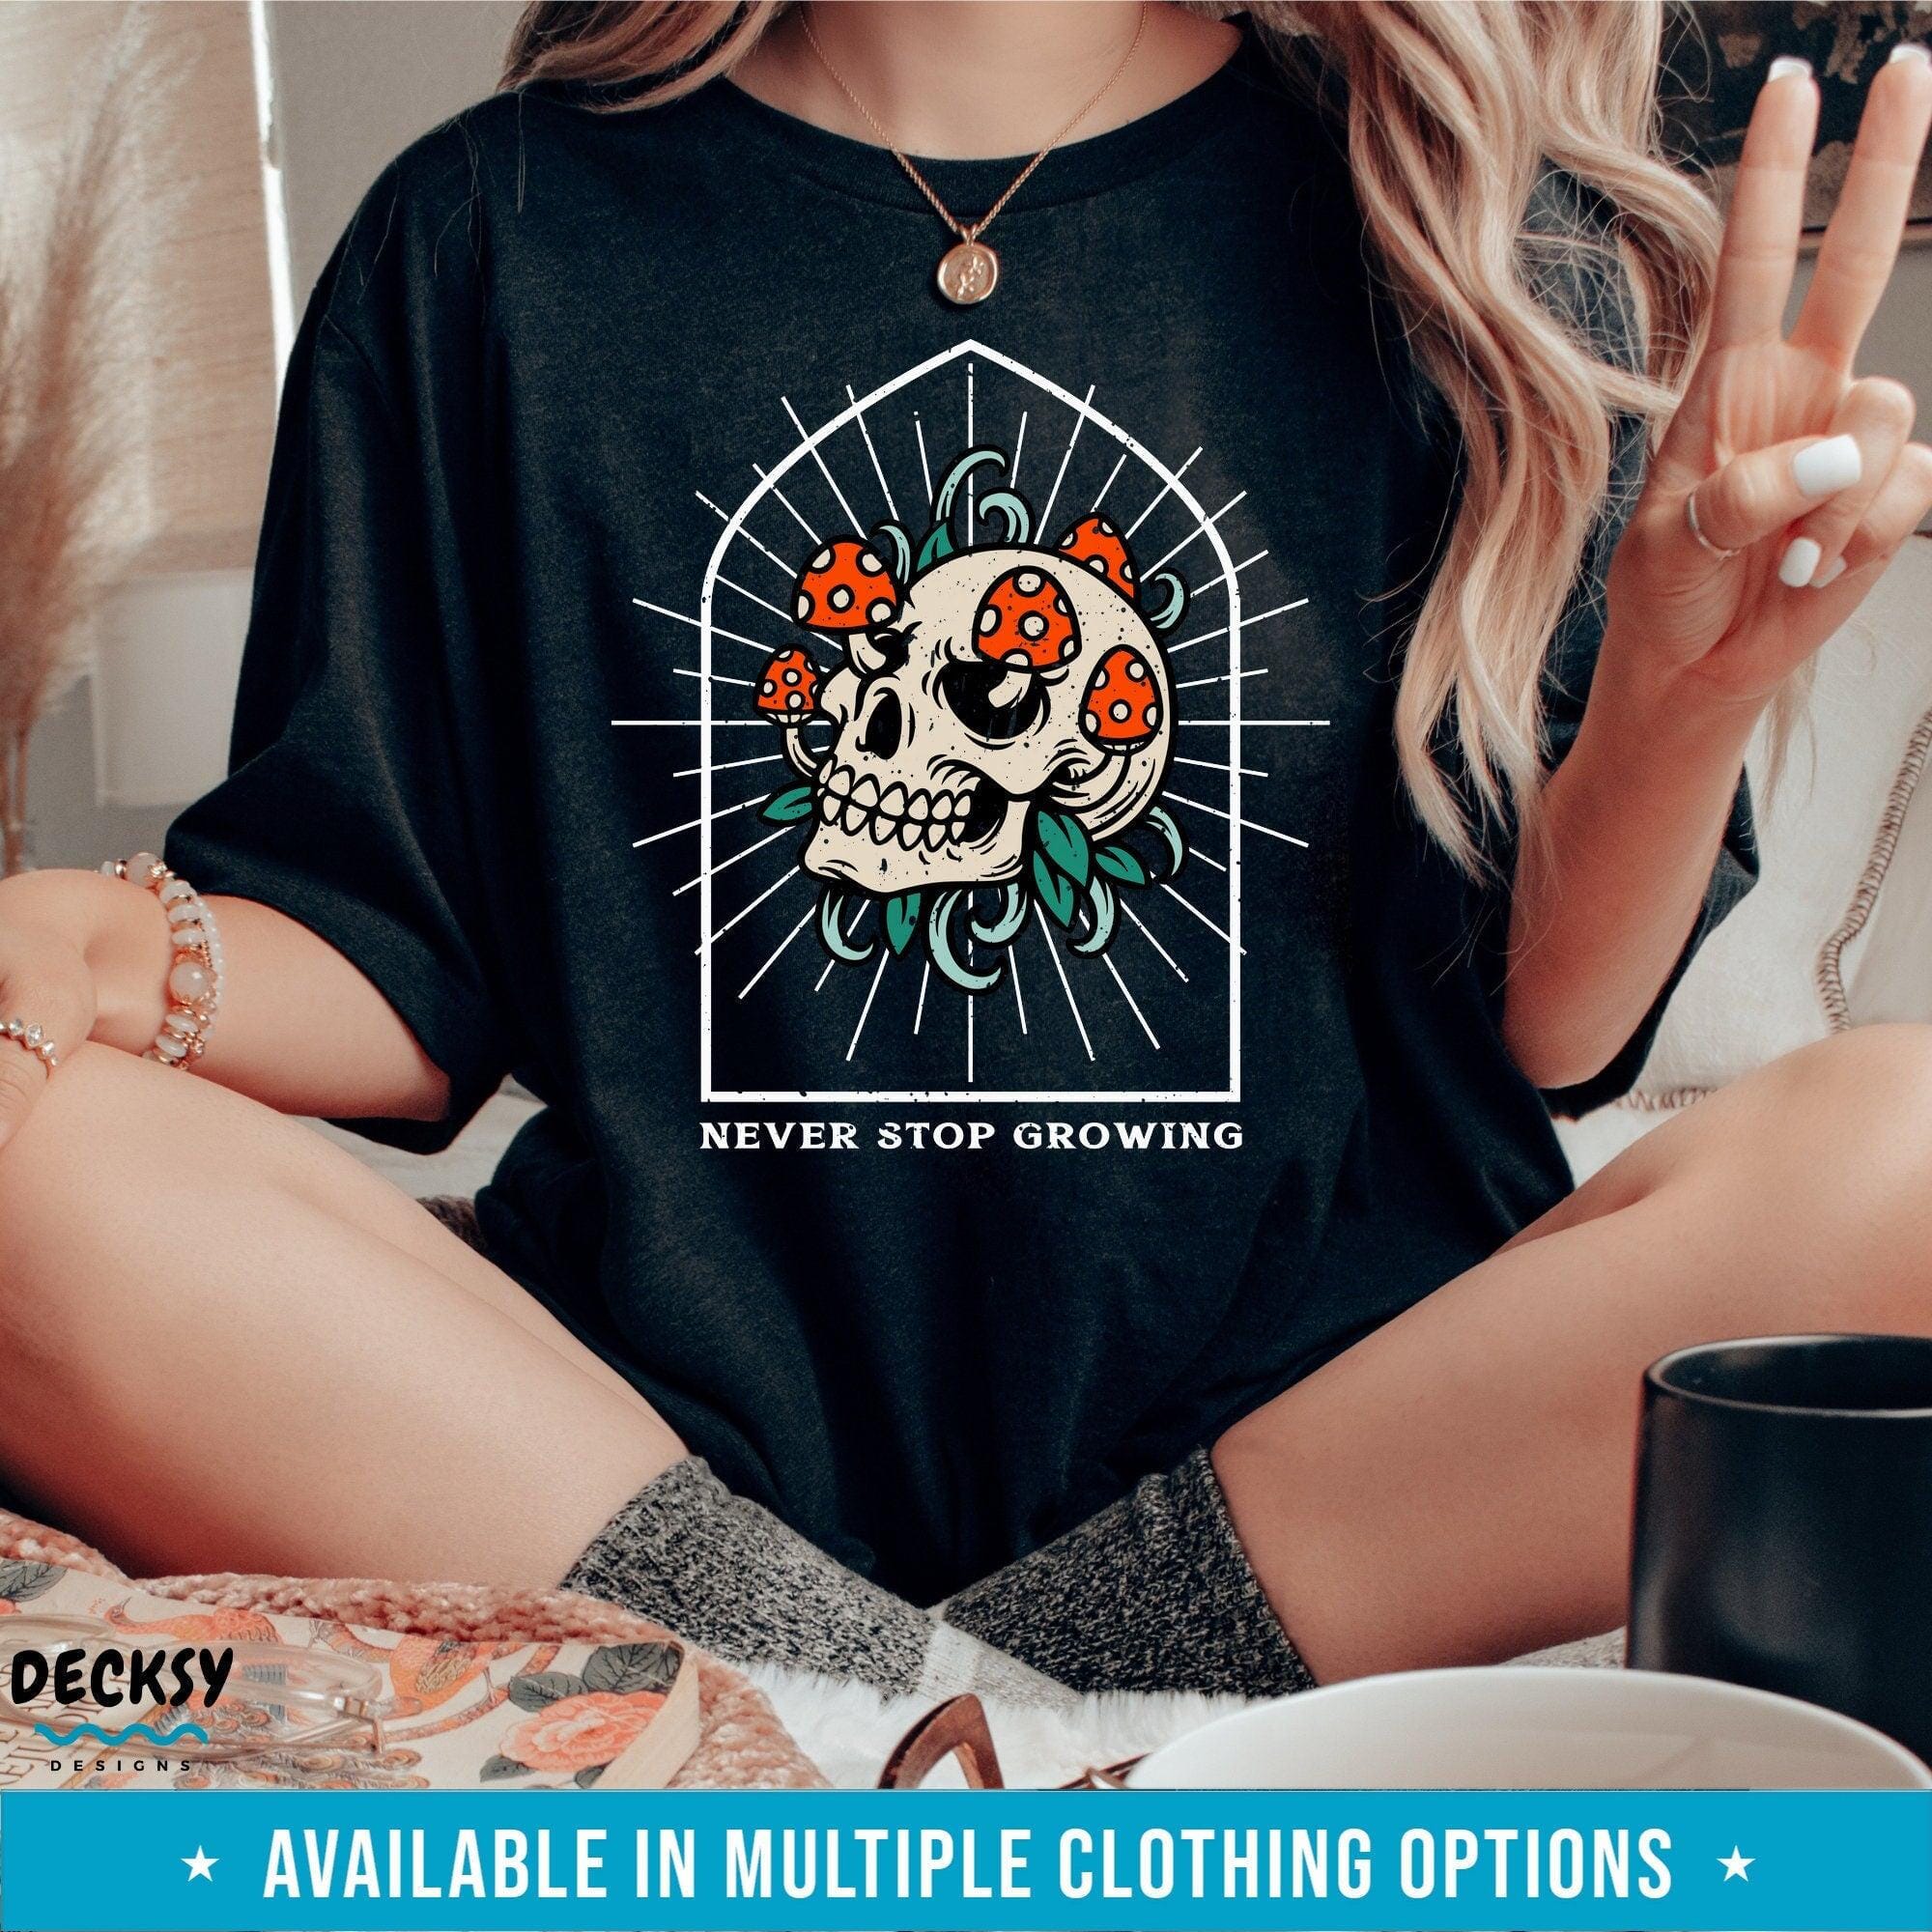 Mushroom Skull Sweatshirt, Aesthetic Gift-Clothing:Gender-Neutral Adult Clothing:Tops & Tees:T-shirts:Graphic Tees-DecksyDesigns